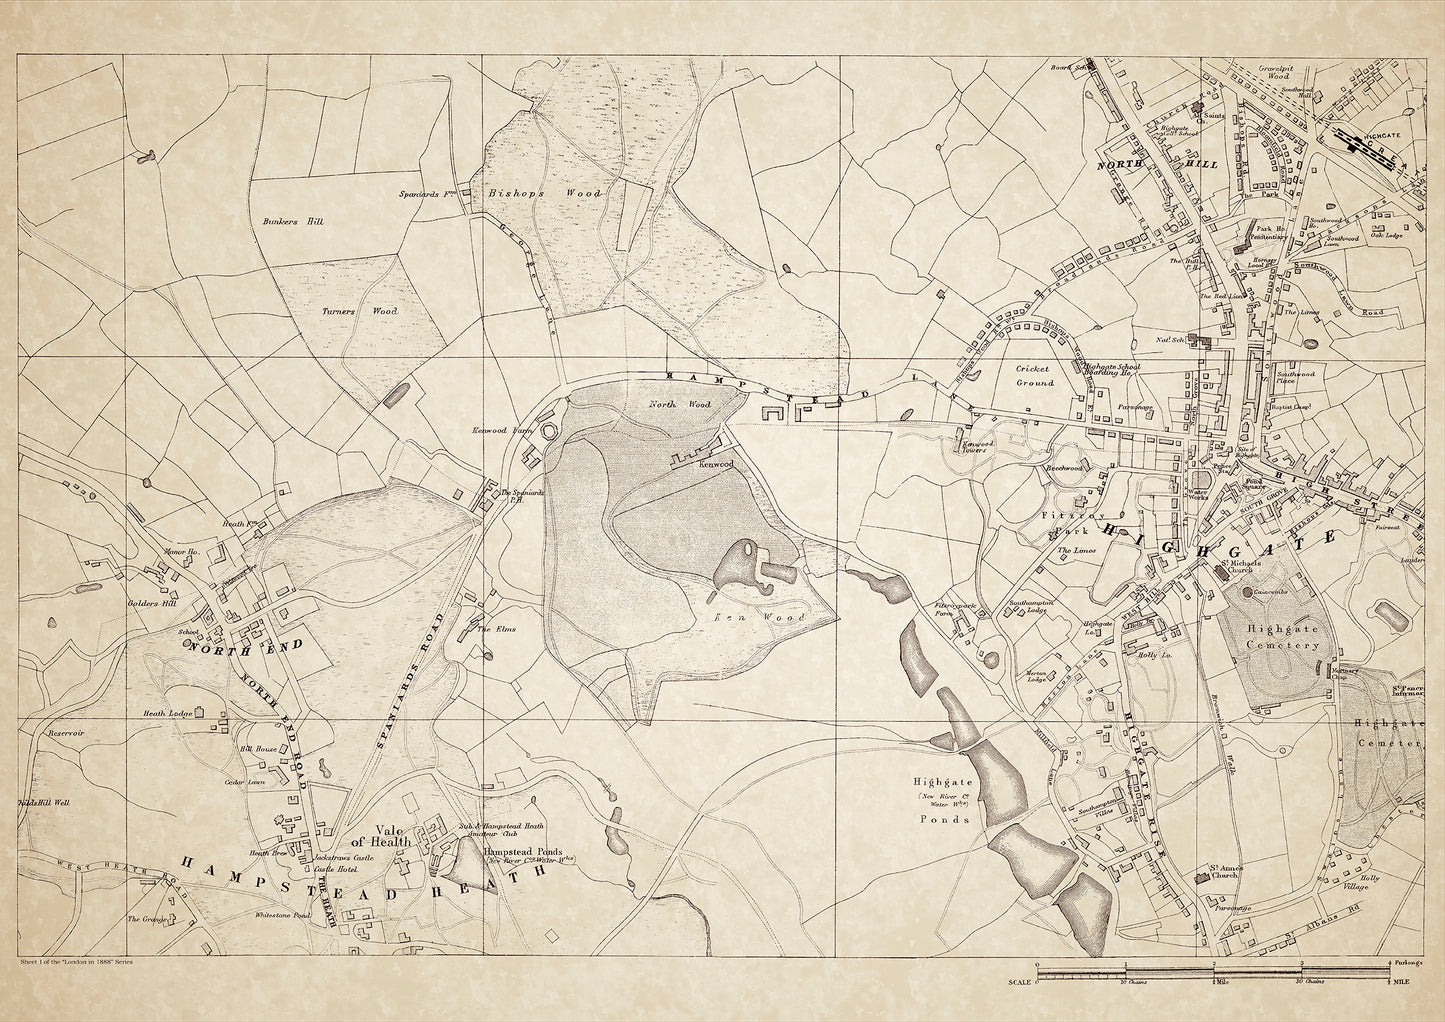 London in 1888 Series - showing Highgate, Hampstead Heath - sheet 1